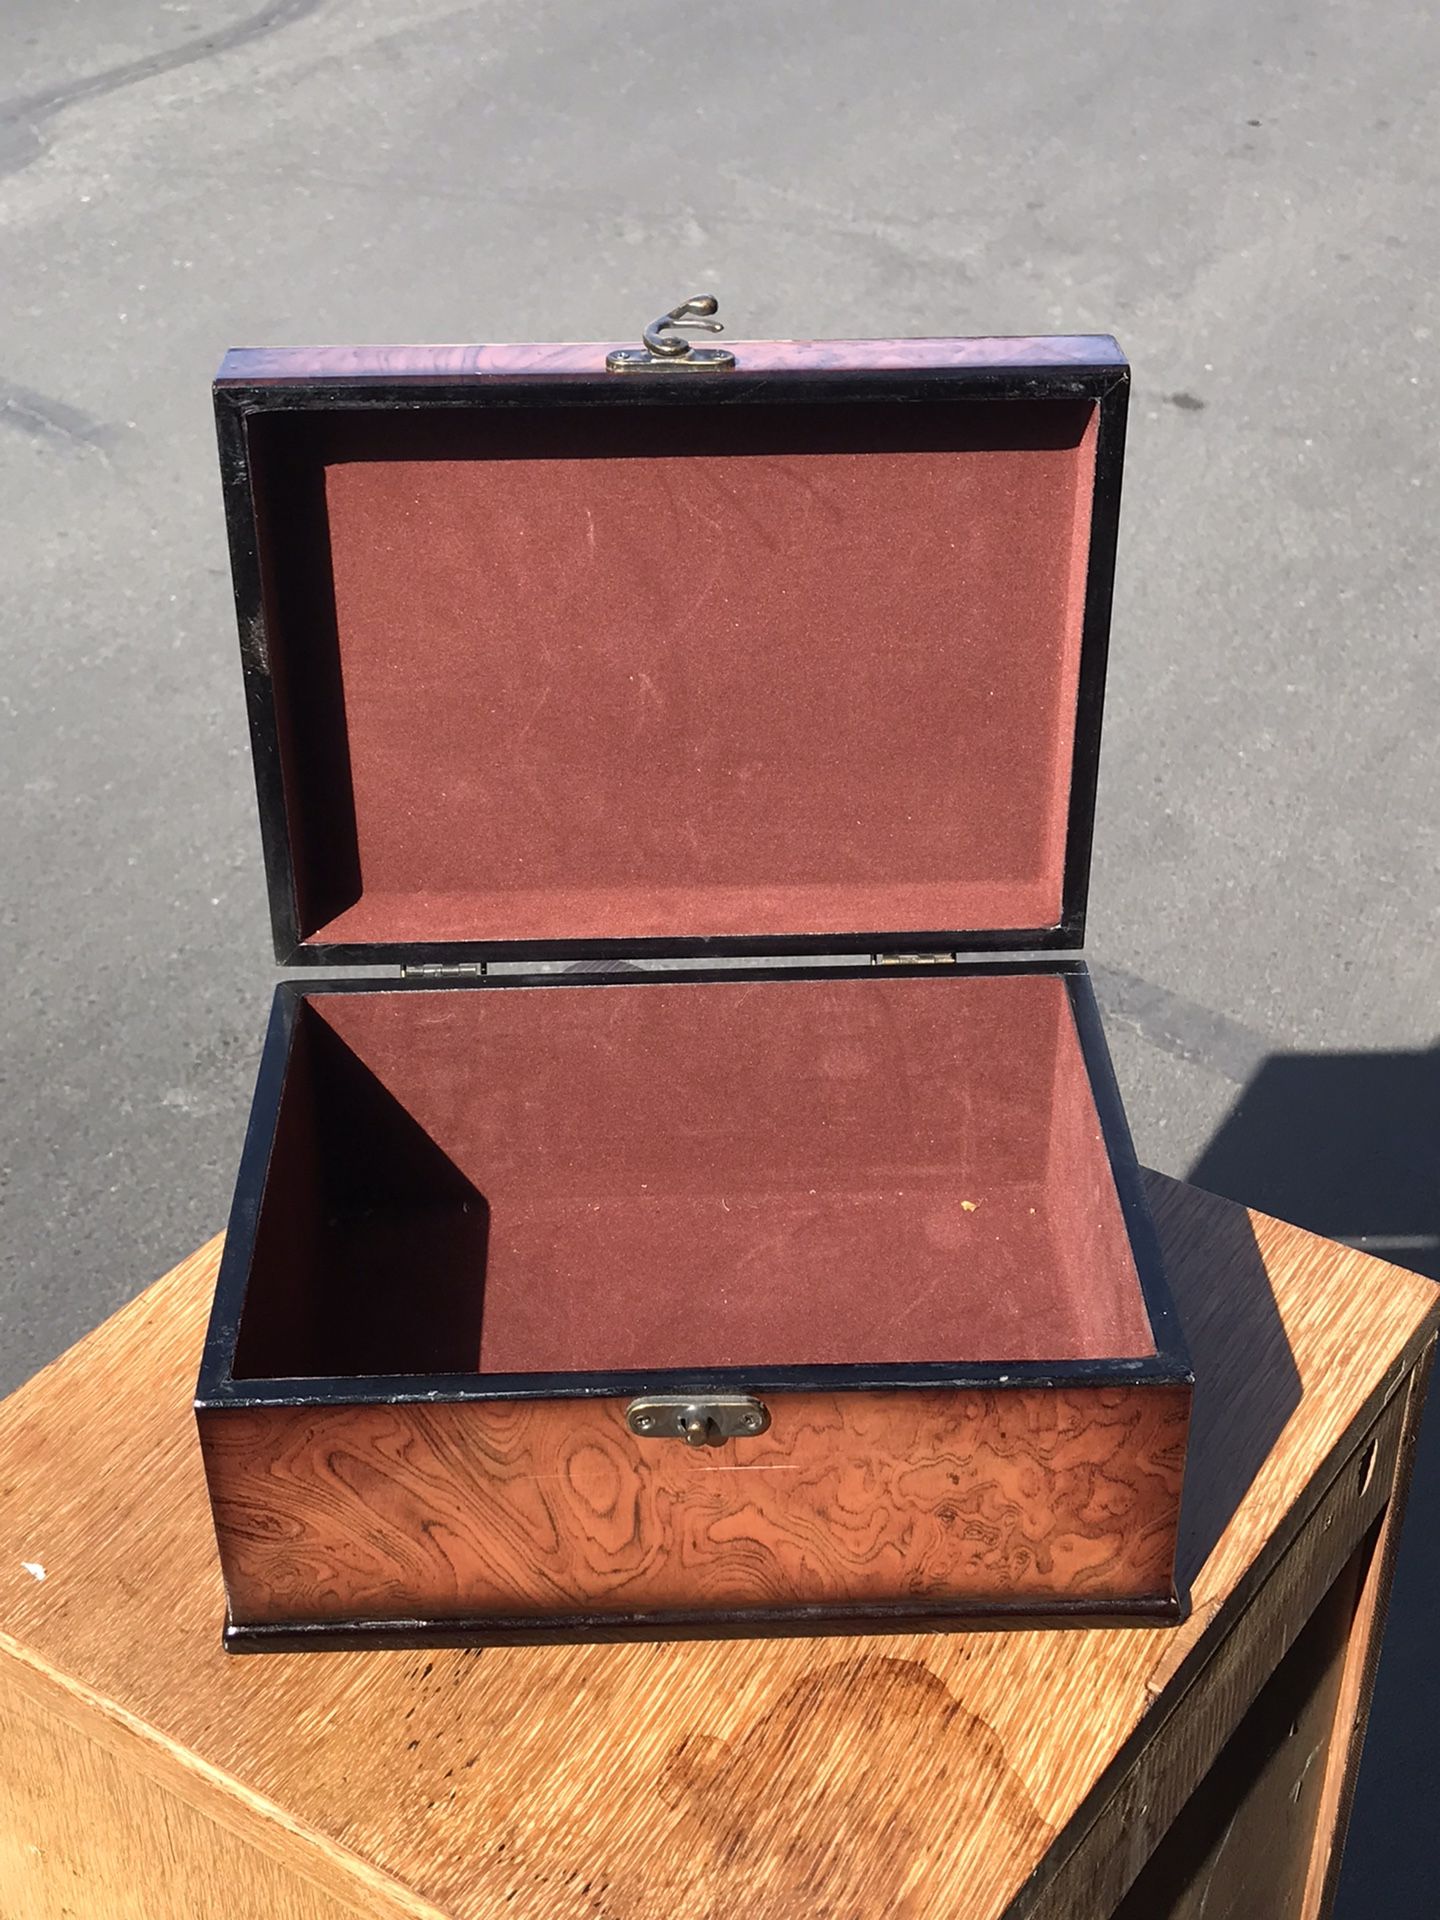 Nice Jewelry Box for Sale in Modesto, CA - OfferUp